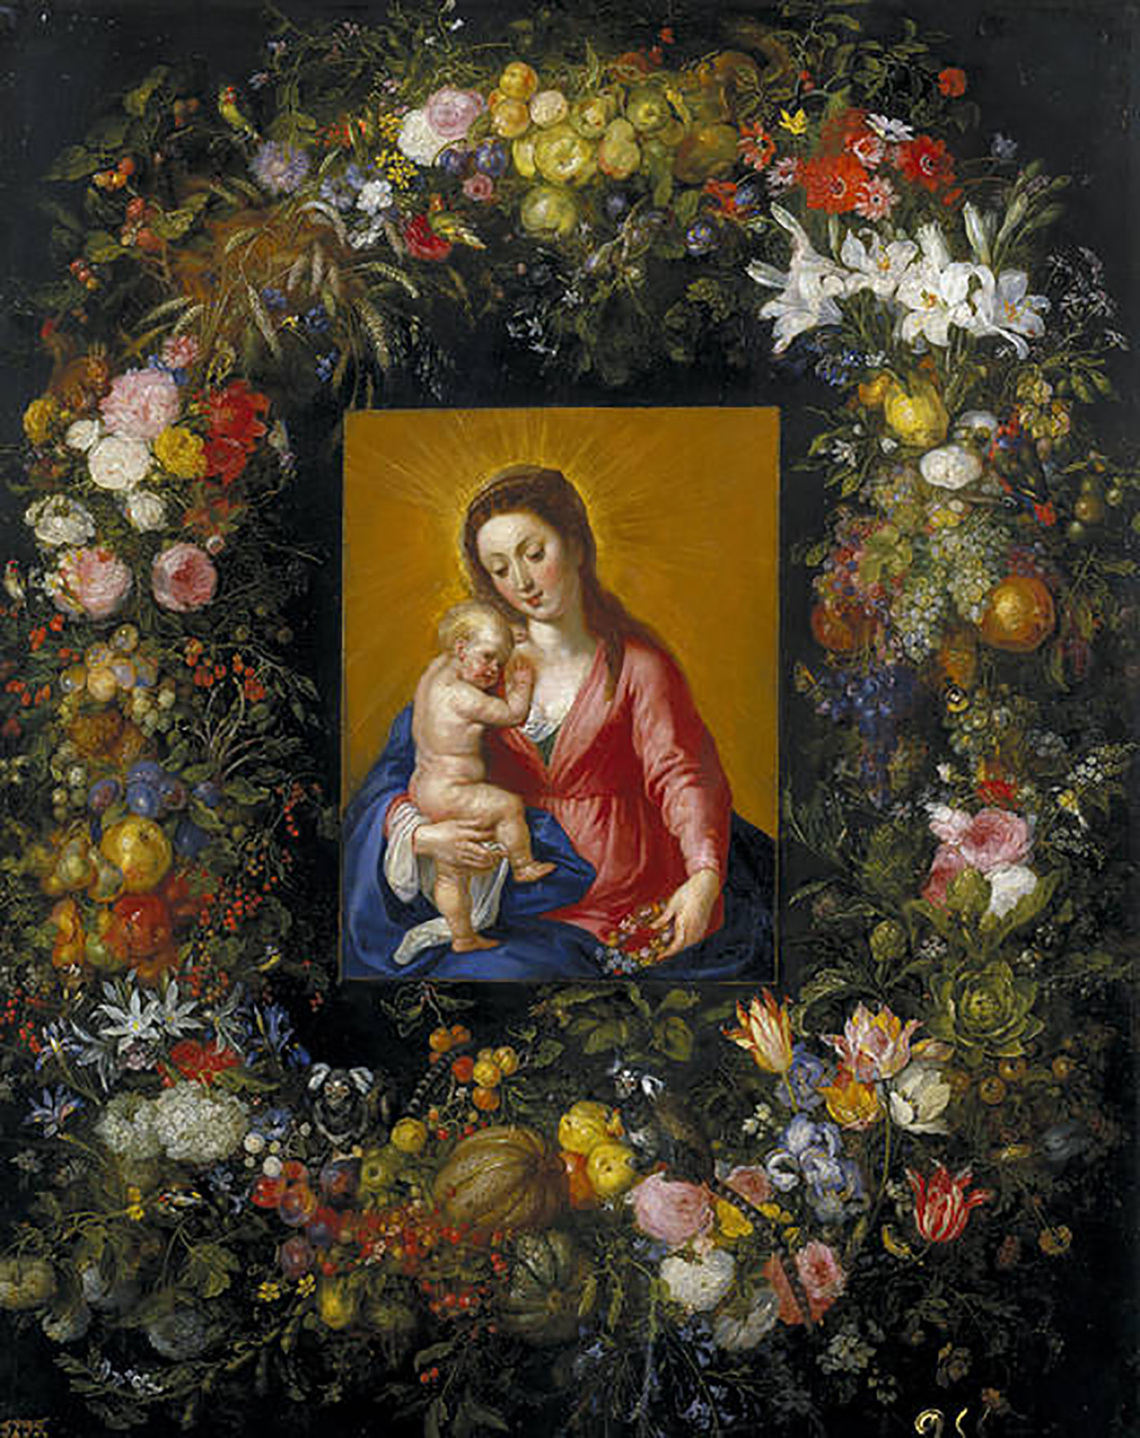 Flower Garland Around the Virgin and Child (Madrid)